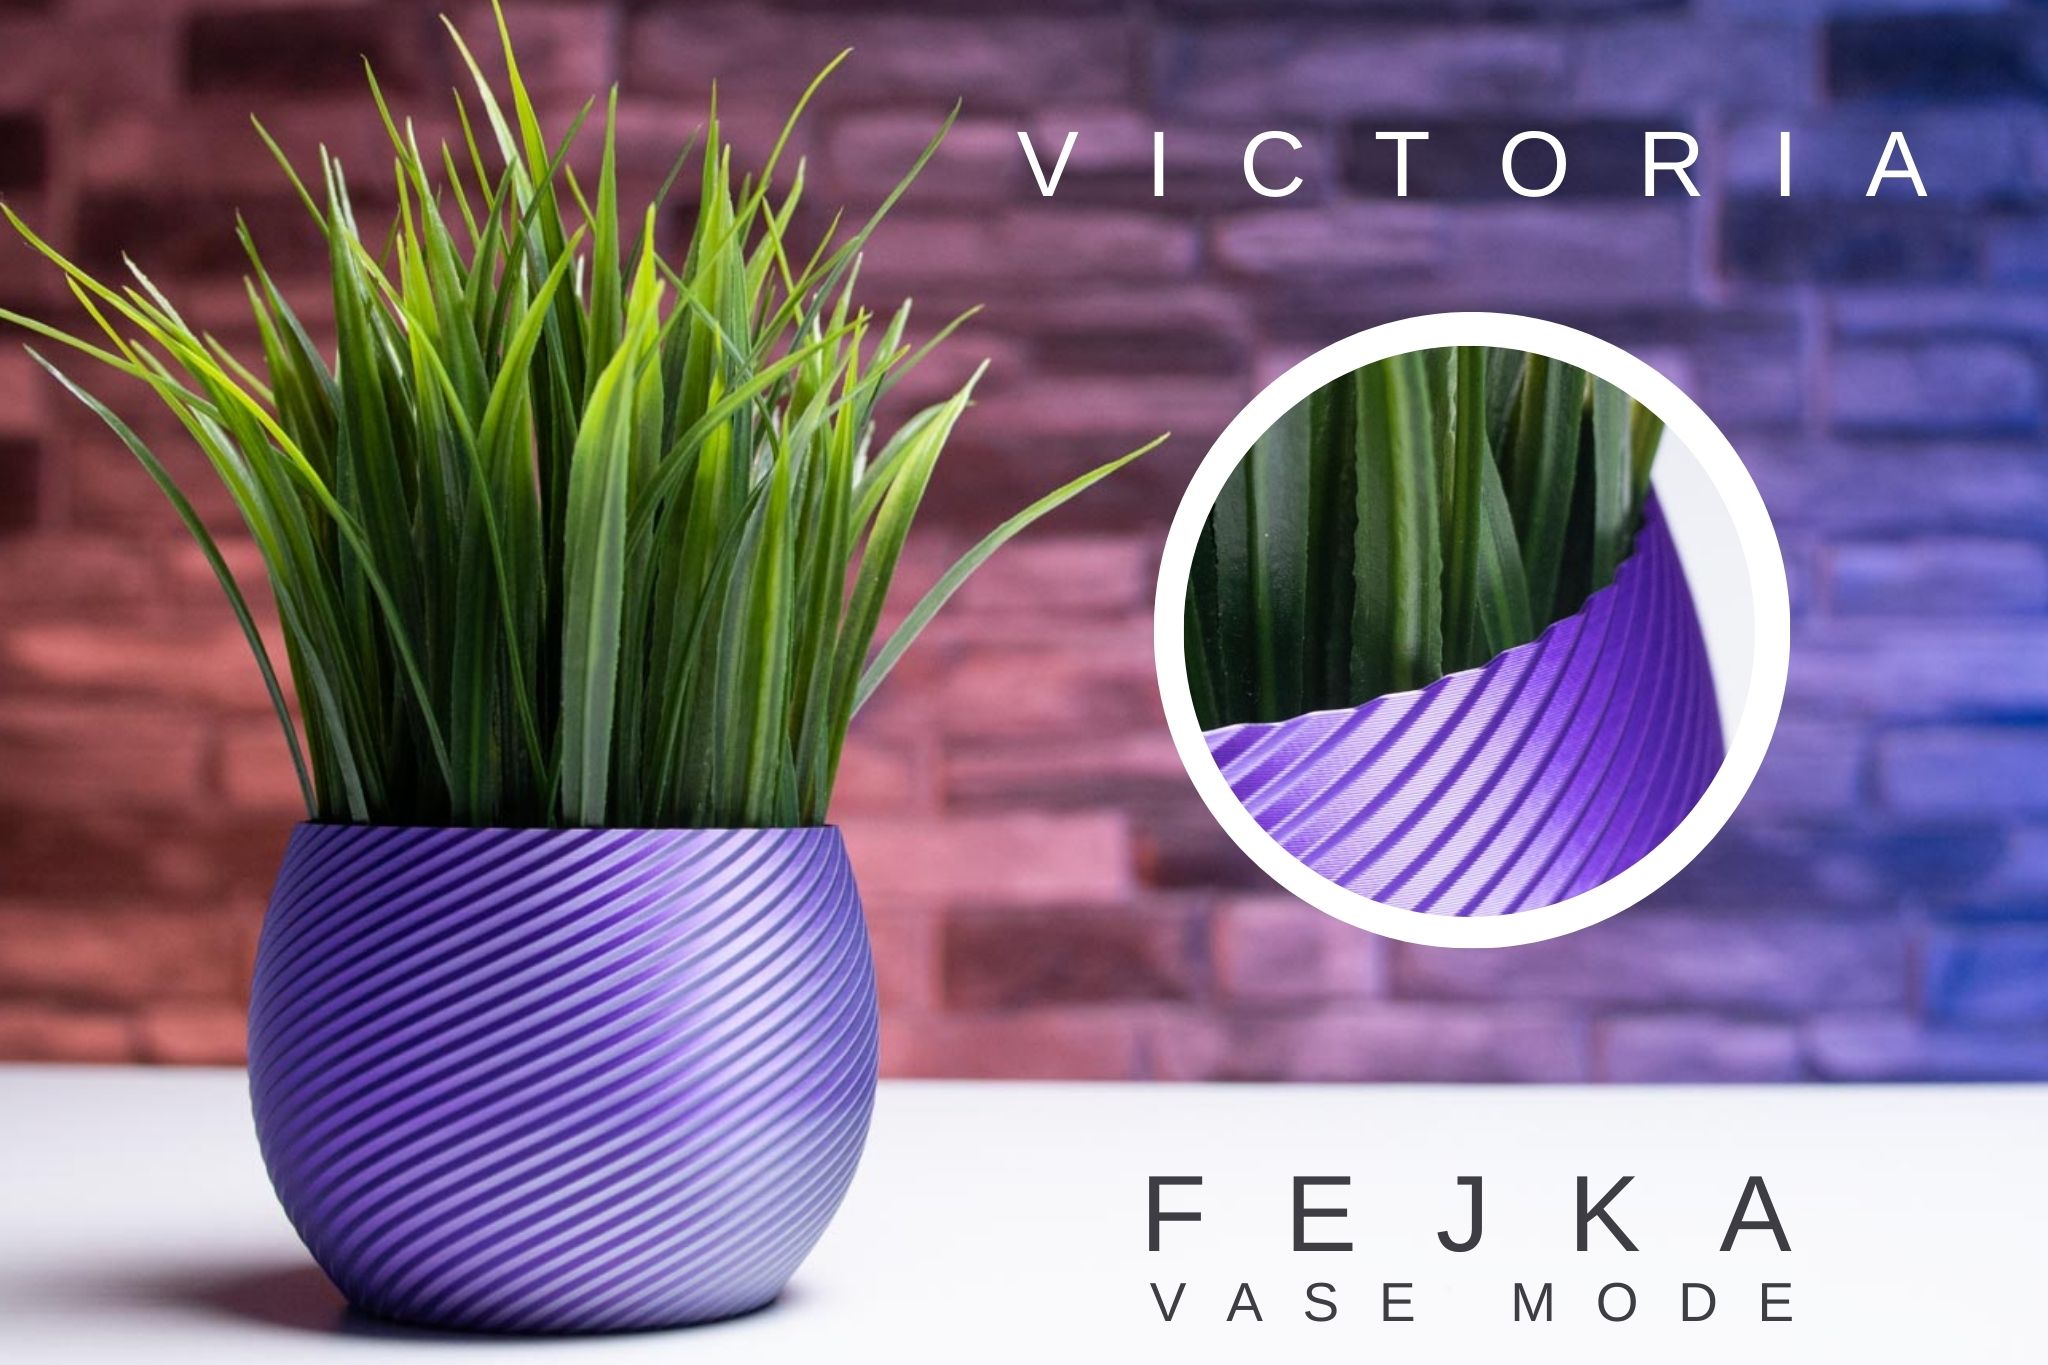 3D Printed Planter and Pot for Ikea Fejka - Vase VICTORIA